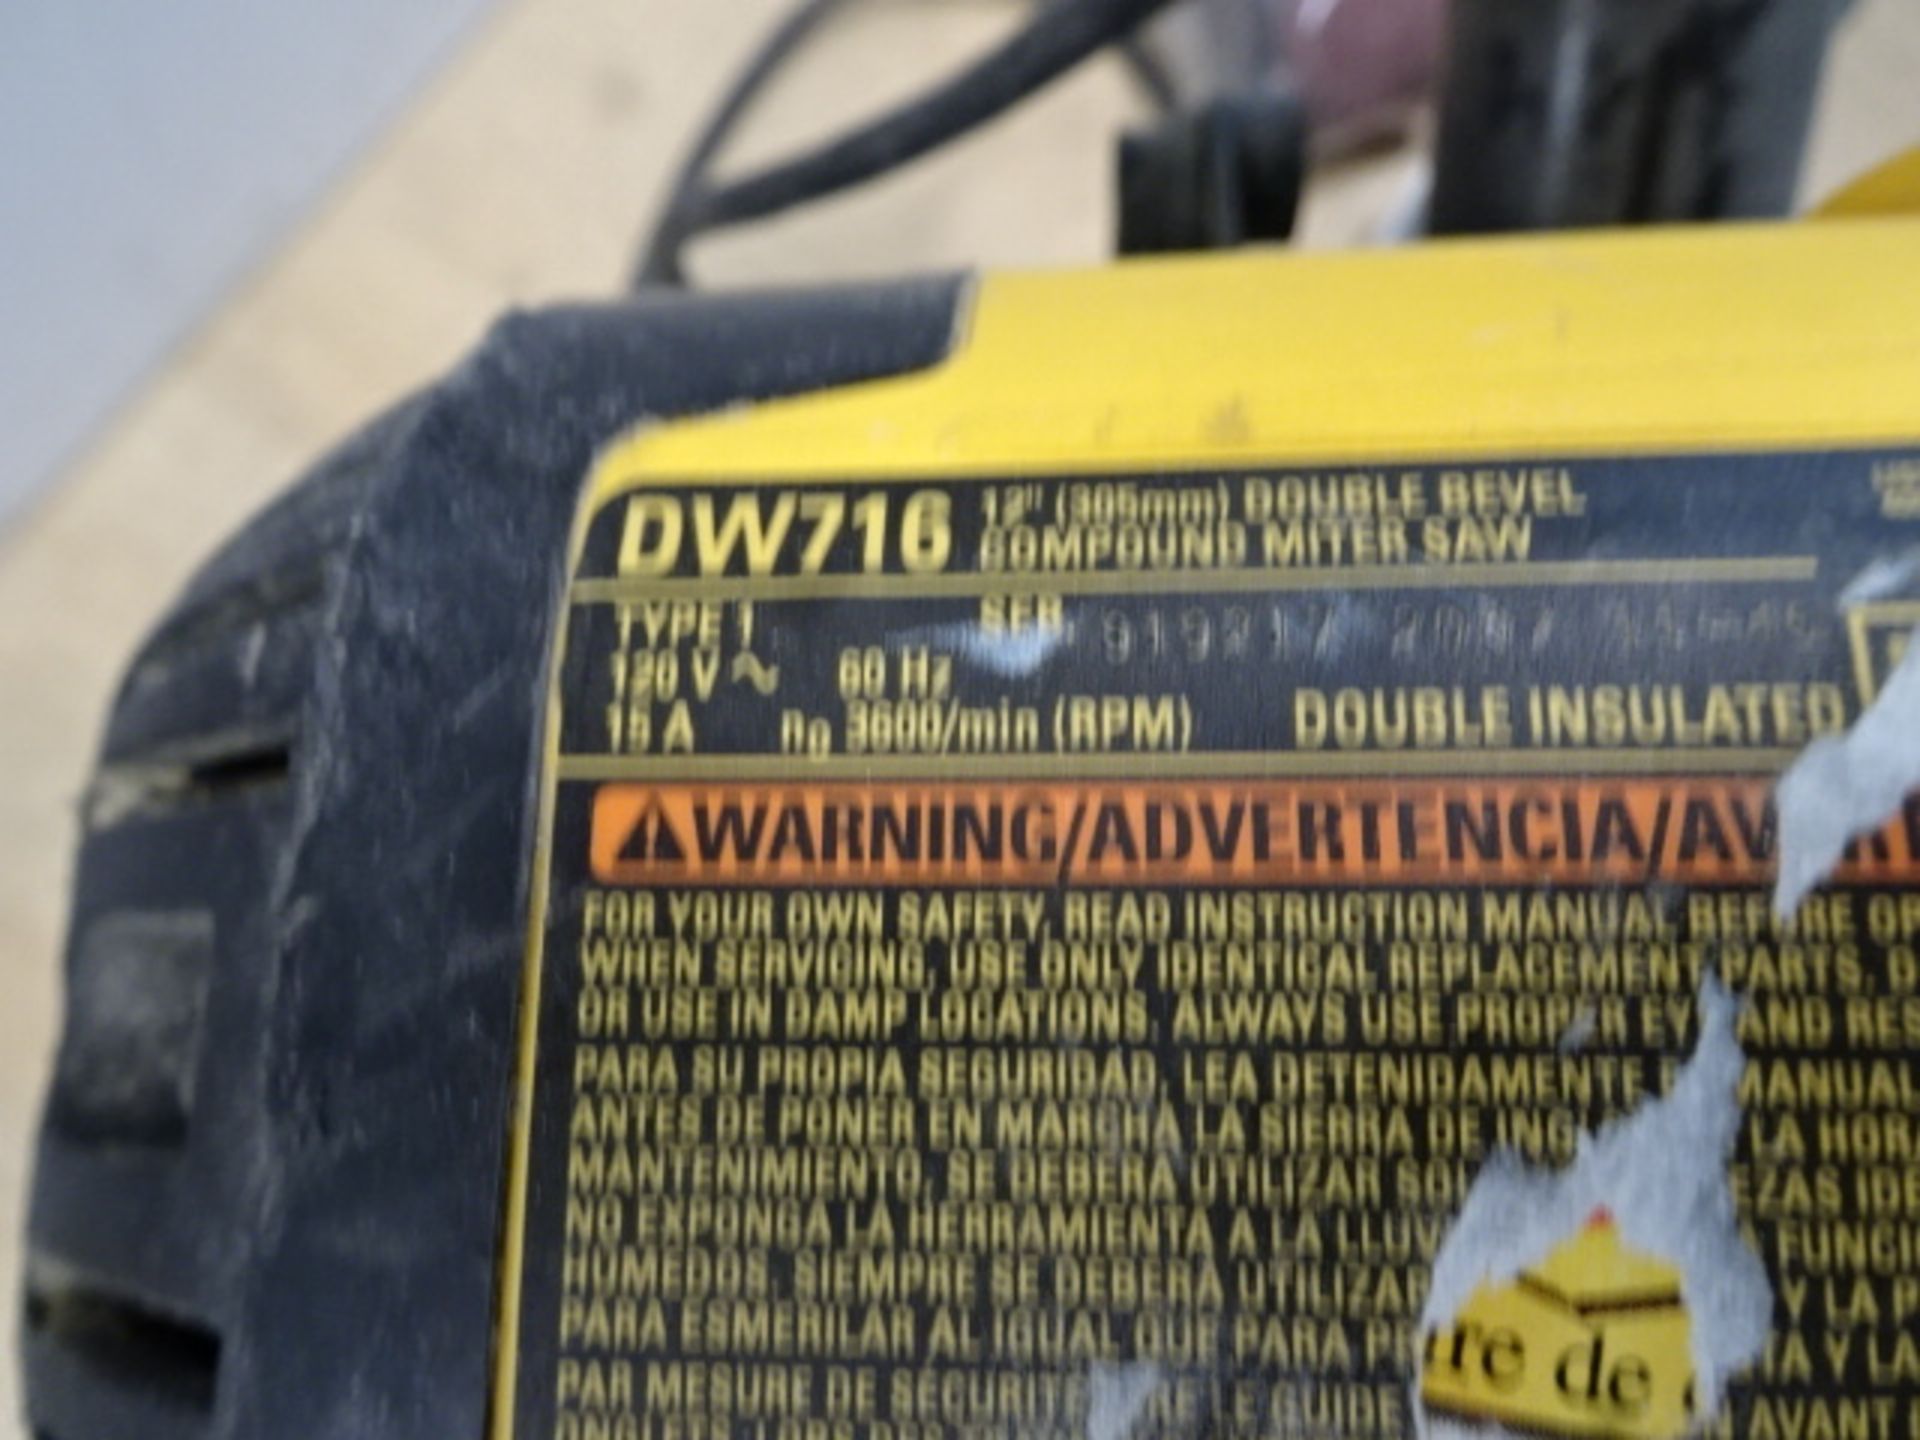 Scie à onglets "Dewalt" DW716 double bevel meter saw - Image 2 of 2